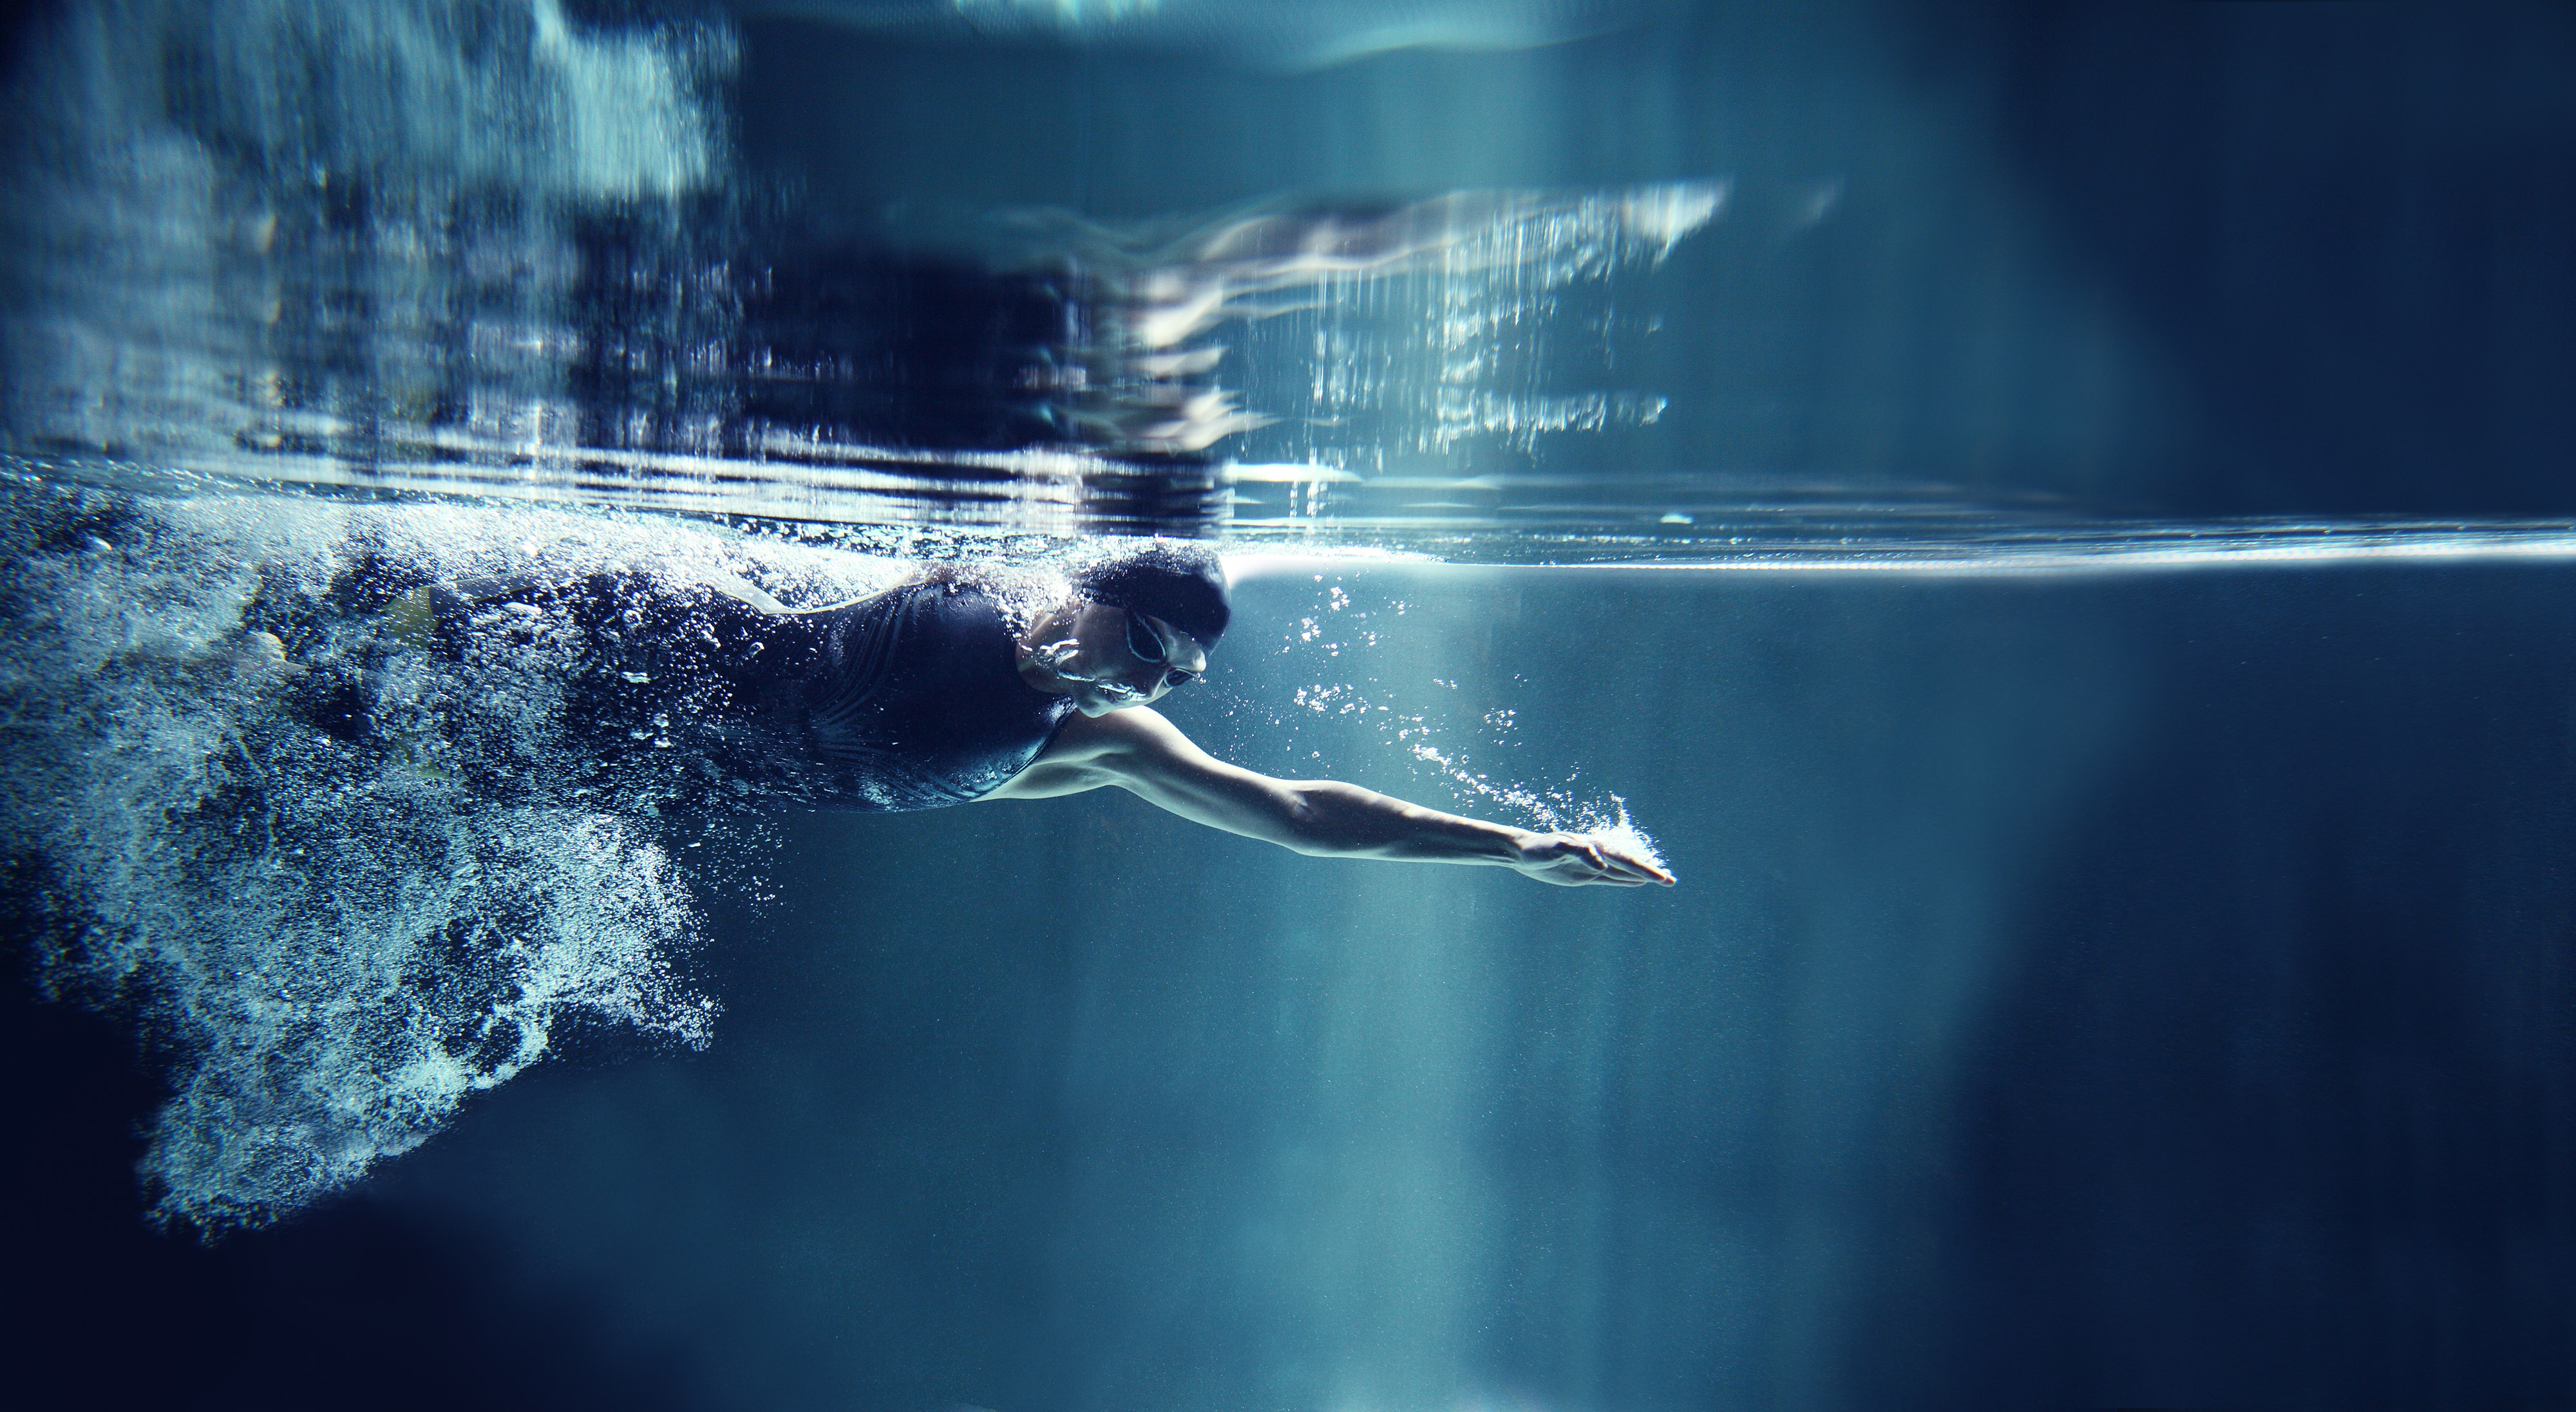 В воде происходят резкие. Человек плывет. Пловец под водой. Плавание (спорт). Плавание картинки.